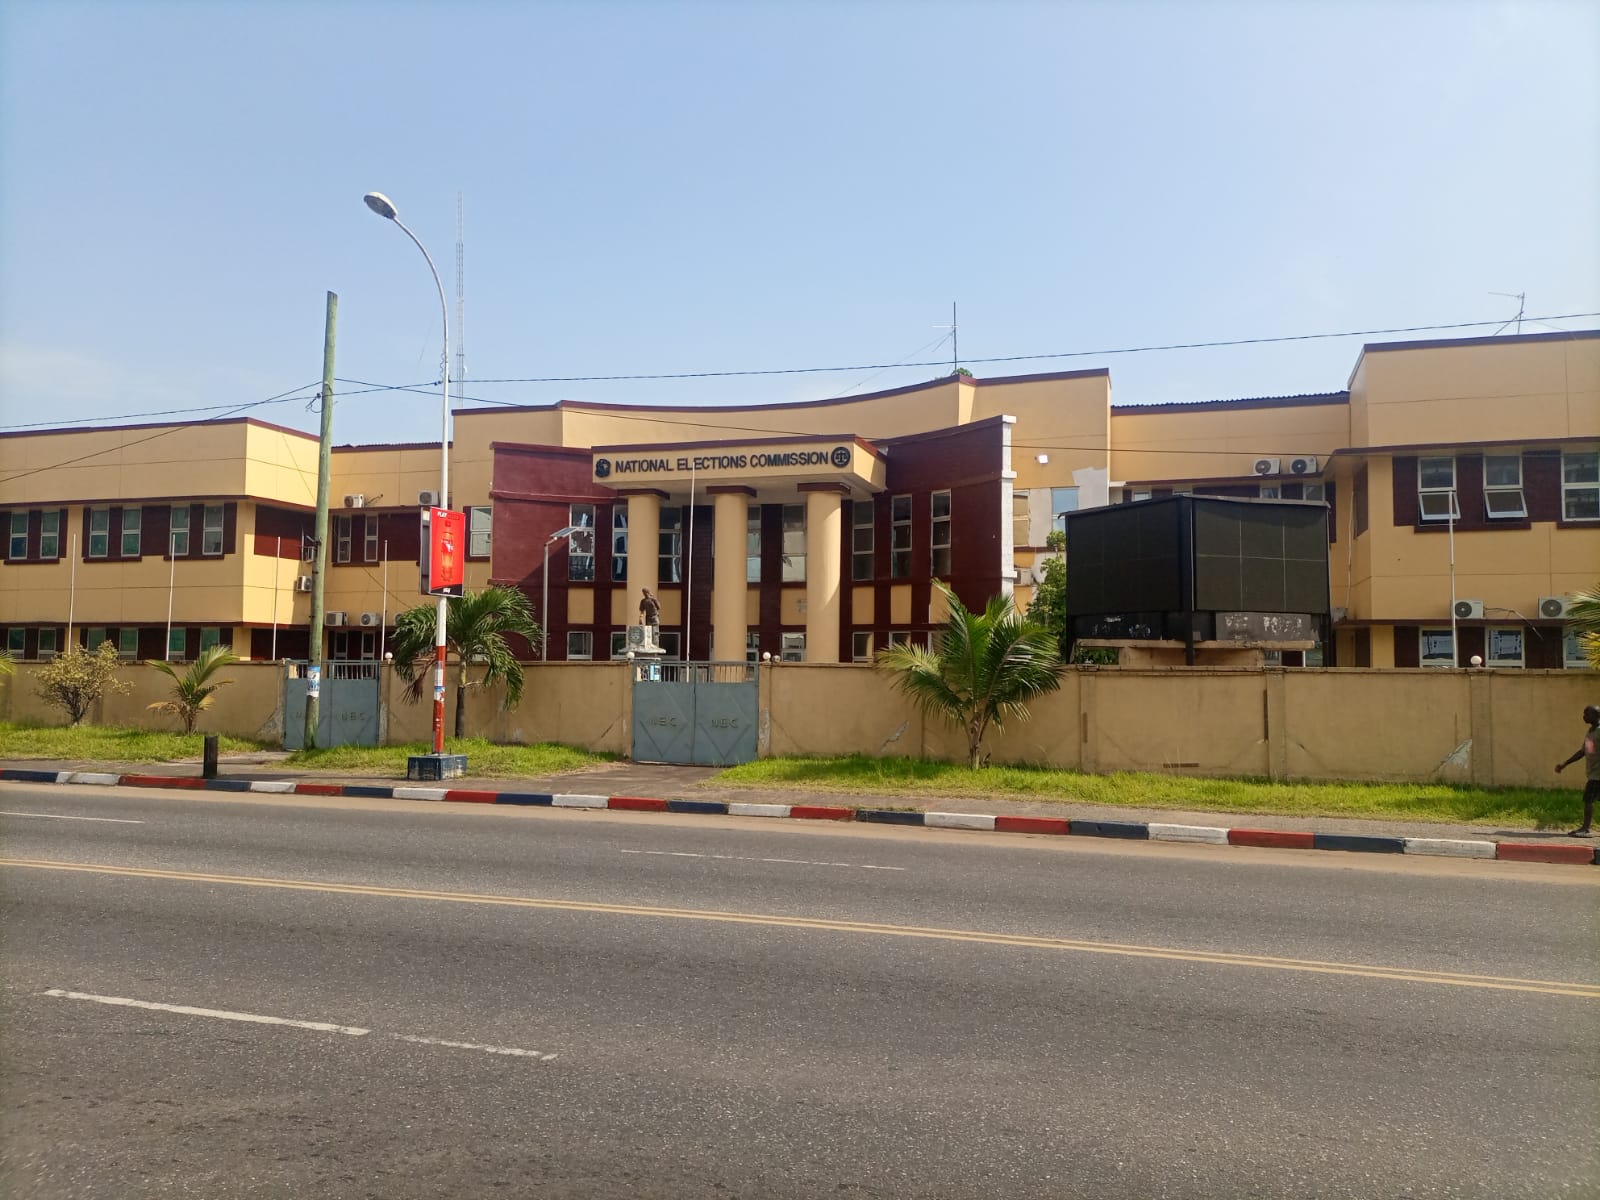 The National Elections Commission, Monrovia, Liberia.